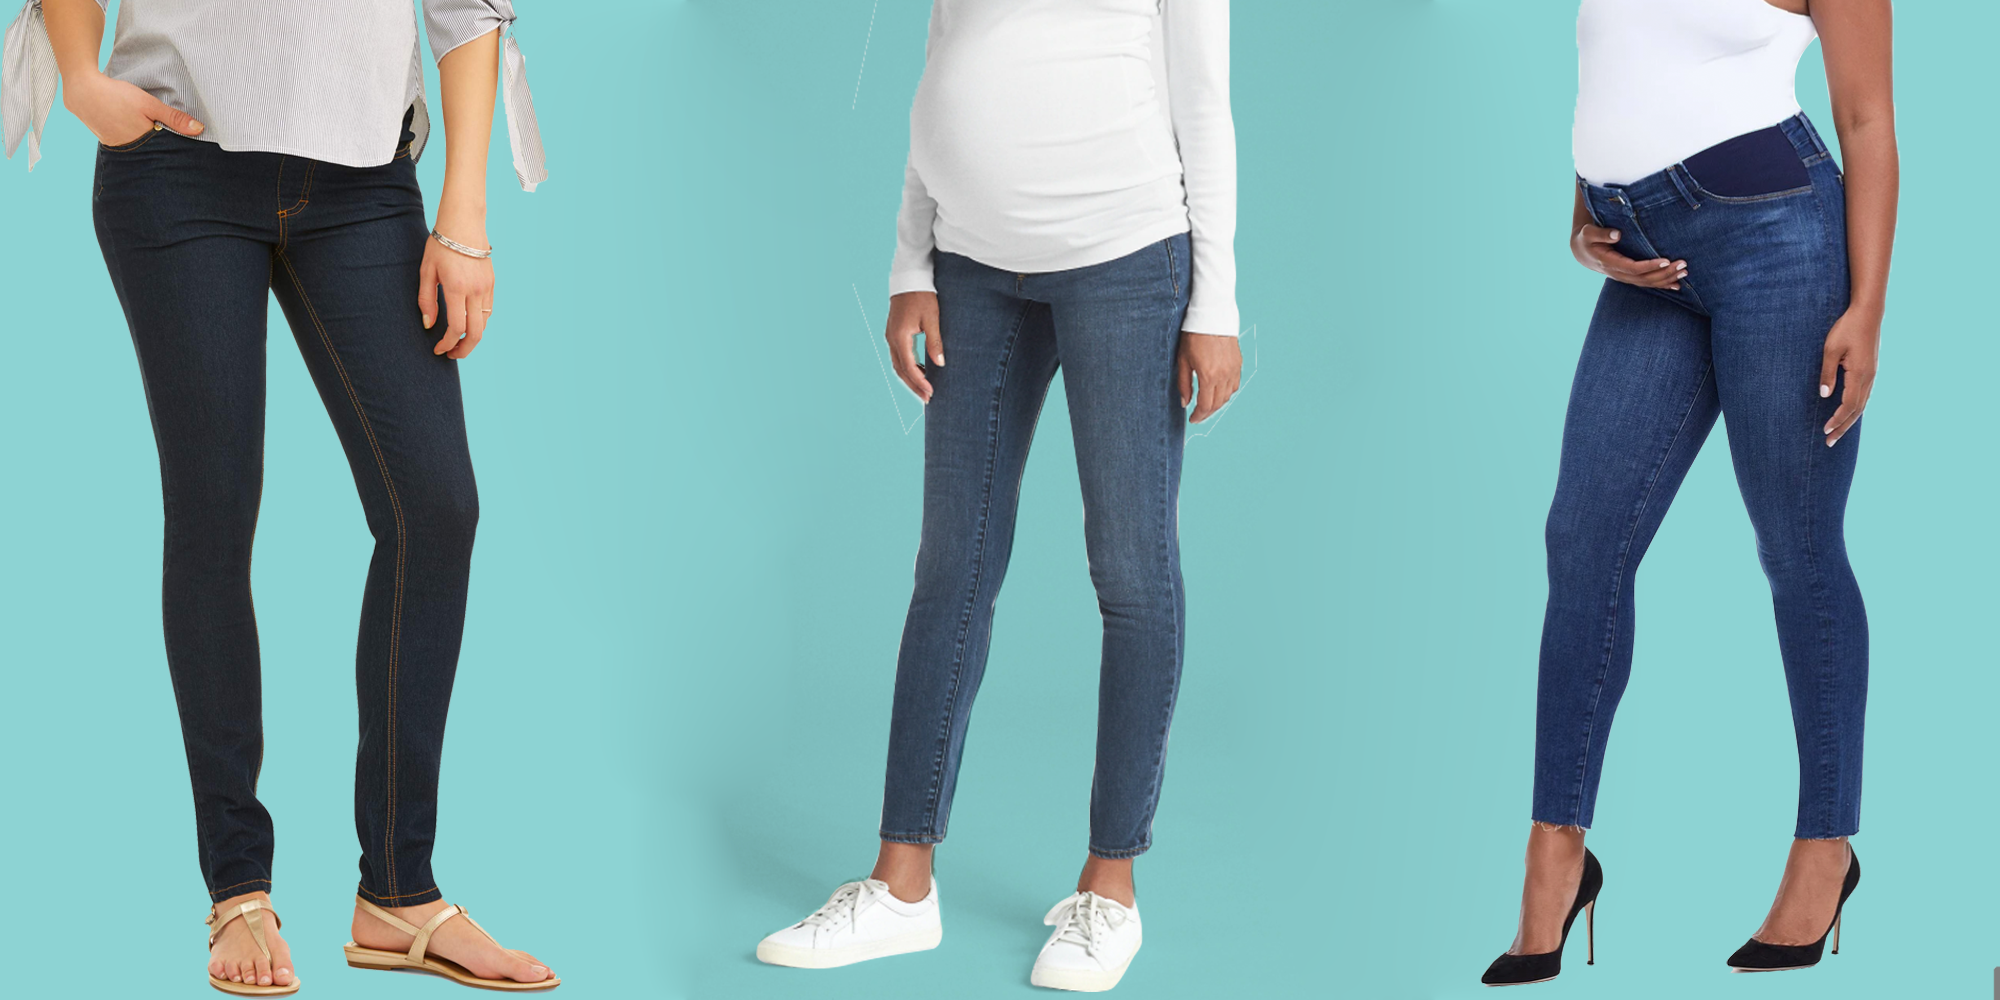 Hope - The Maternity jeans  Latest maternity wear, Maternity wear